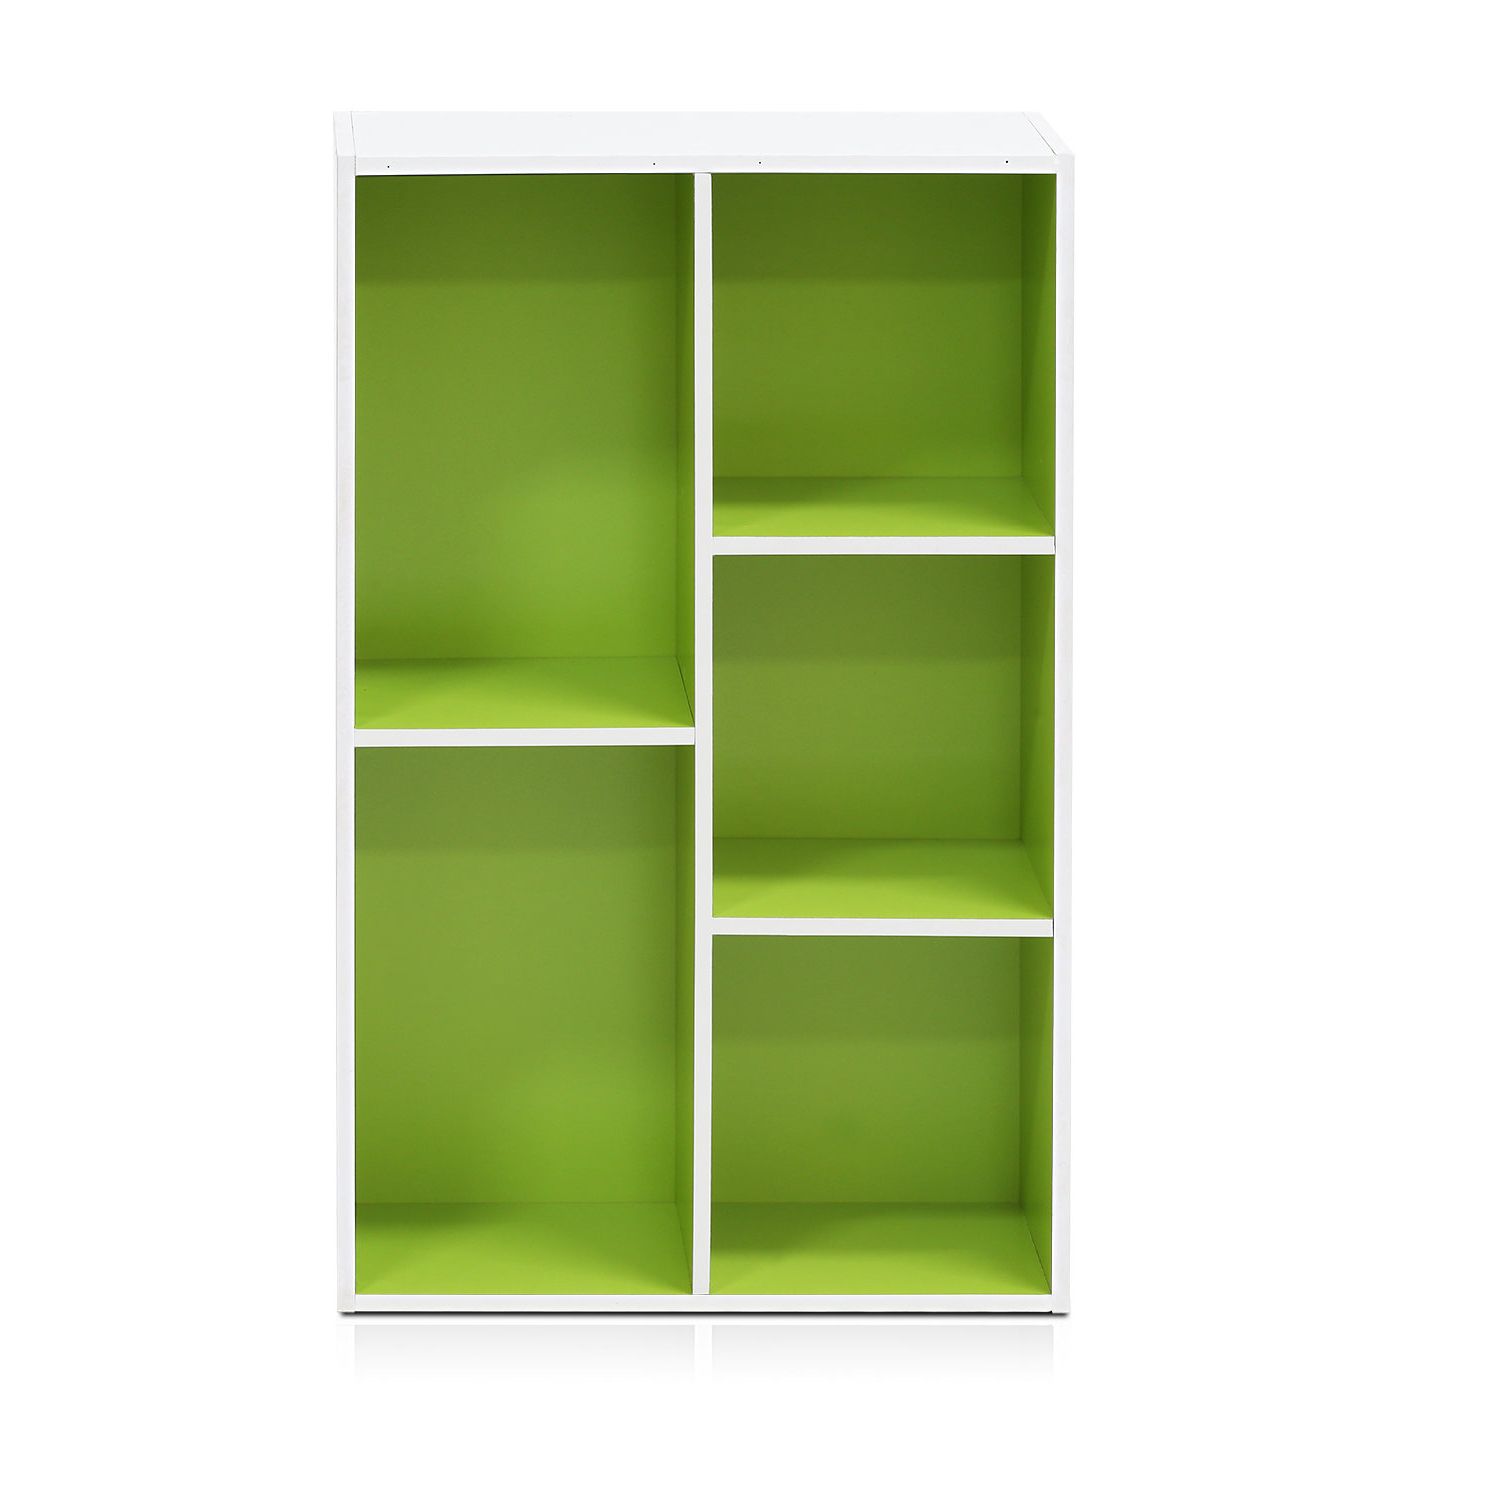 Details About Ebern Designs Harkless Standard Bookcase Regarding 2019 Harkless Standard Bookcases (View 8 of 20)